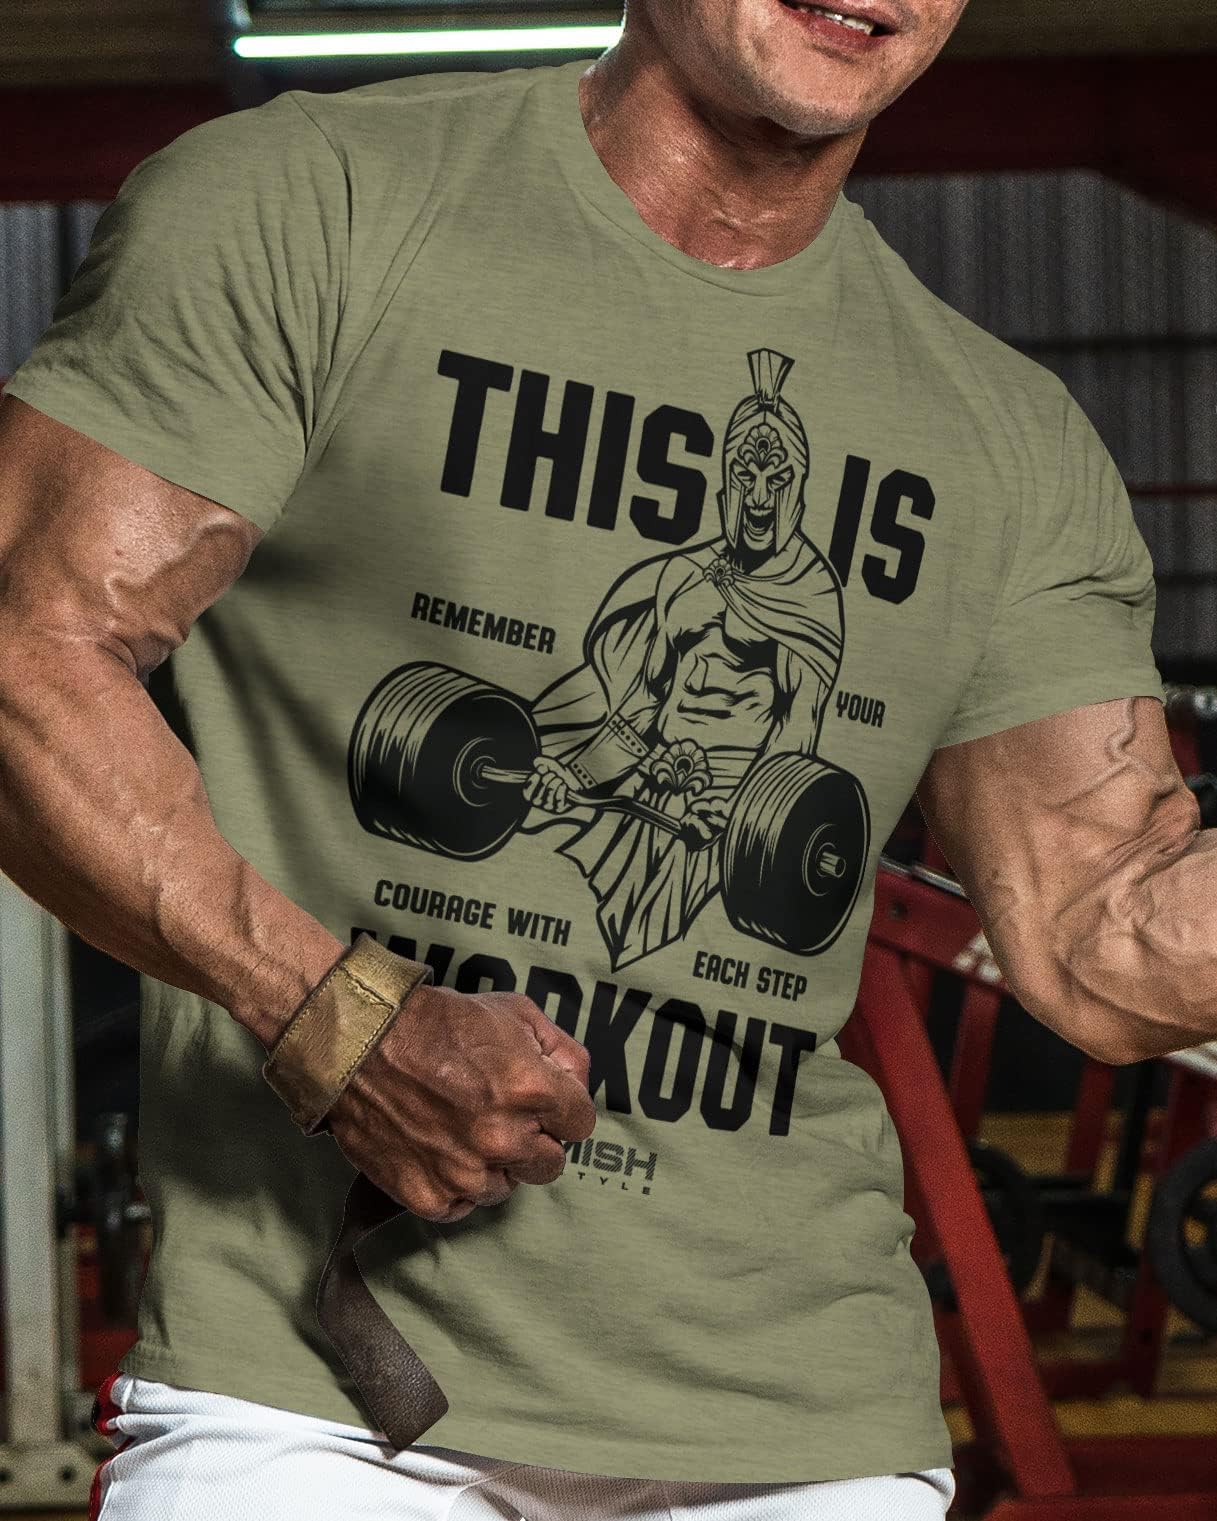 026. Spartan Gym Workout T-Shirt